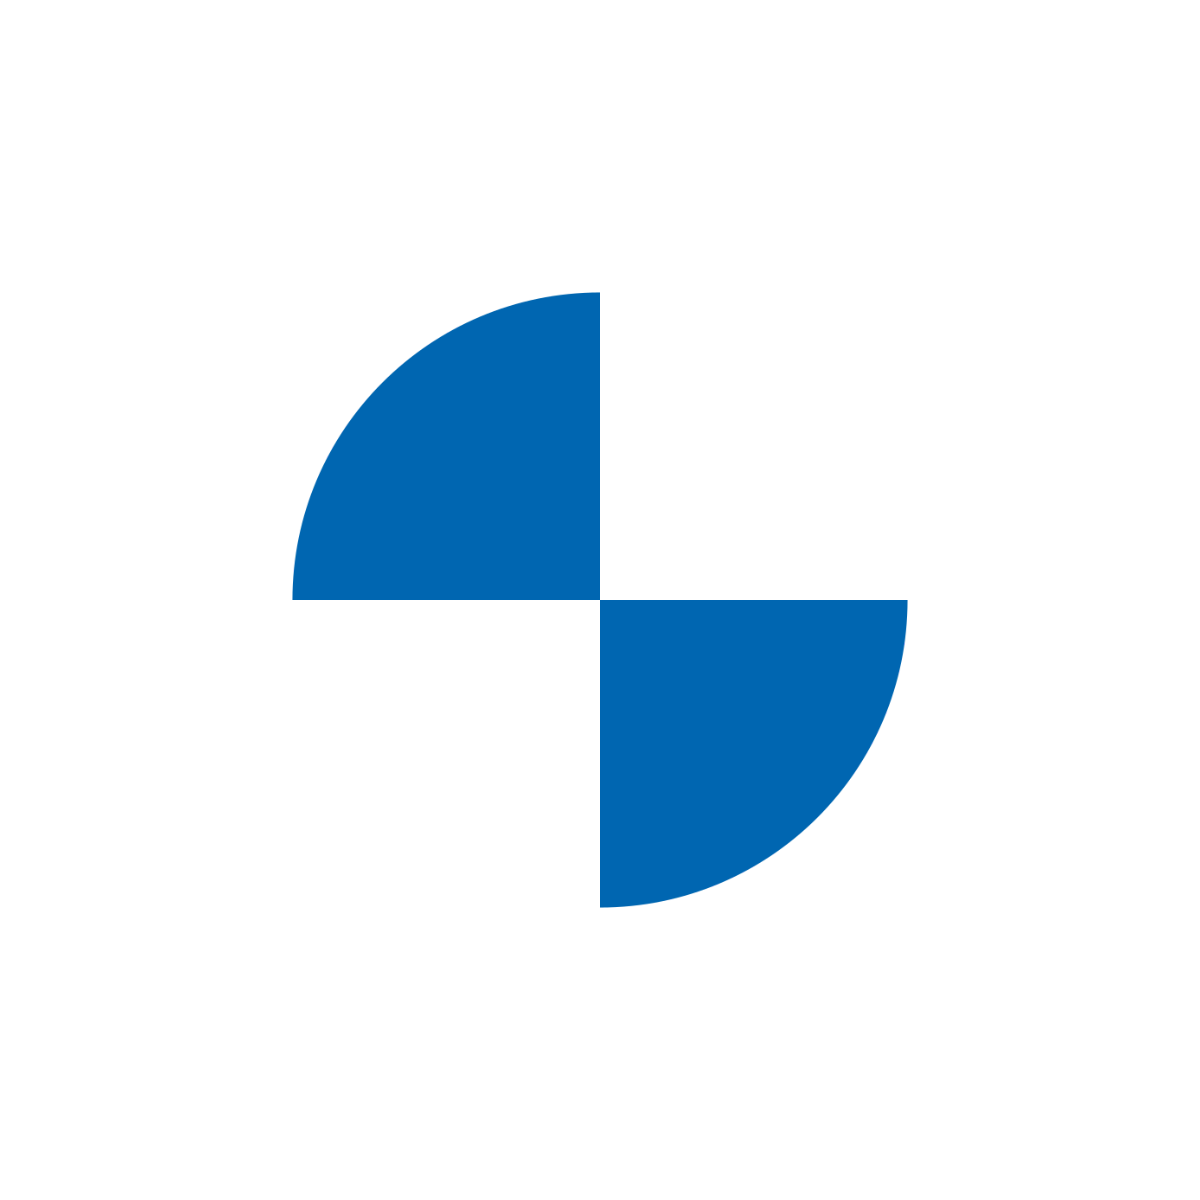 bmw-logo-2020-blue-white